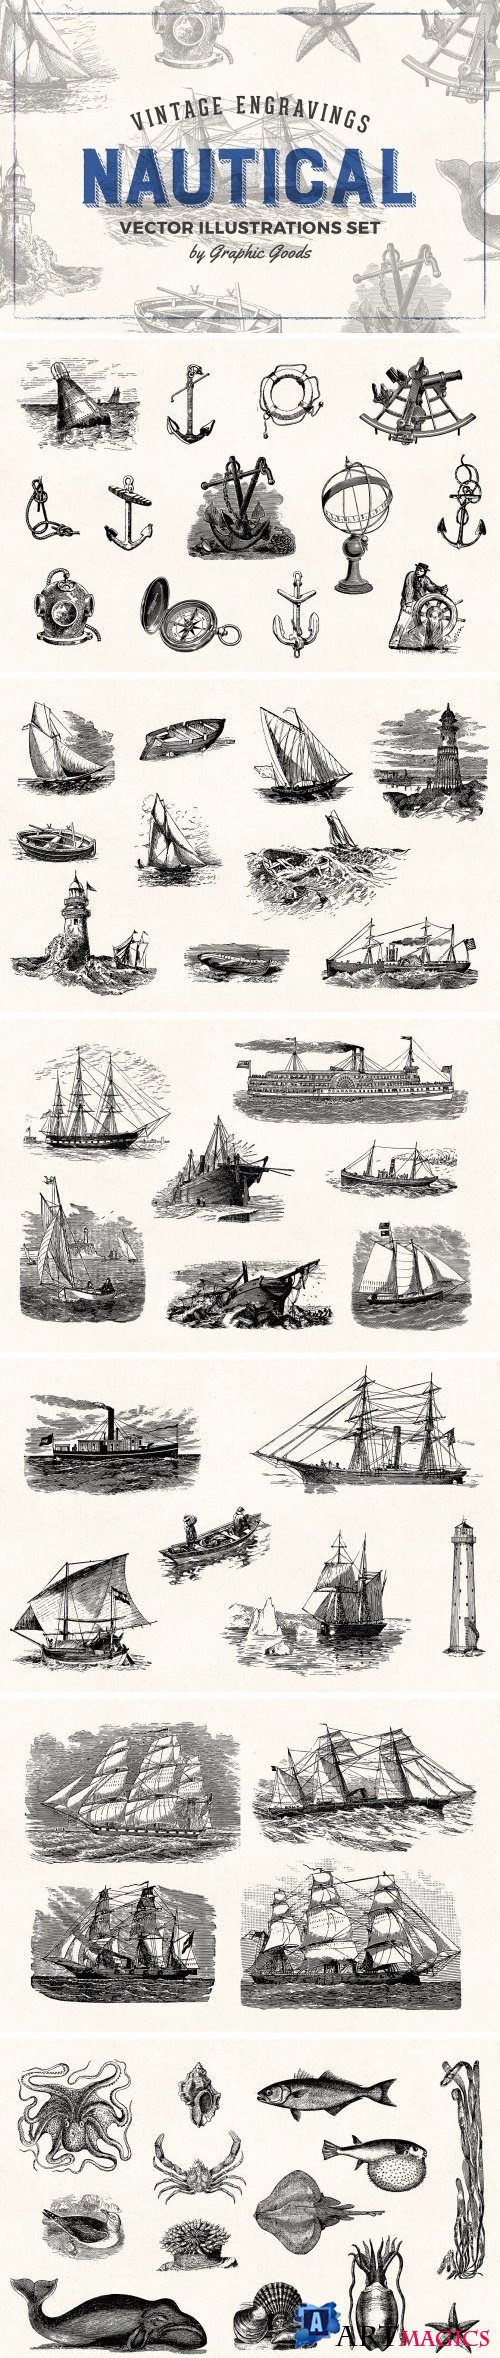 Nautical Engraving Illustrations - 1461014